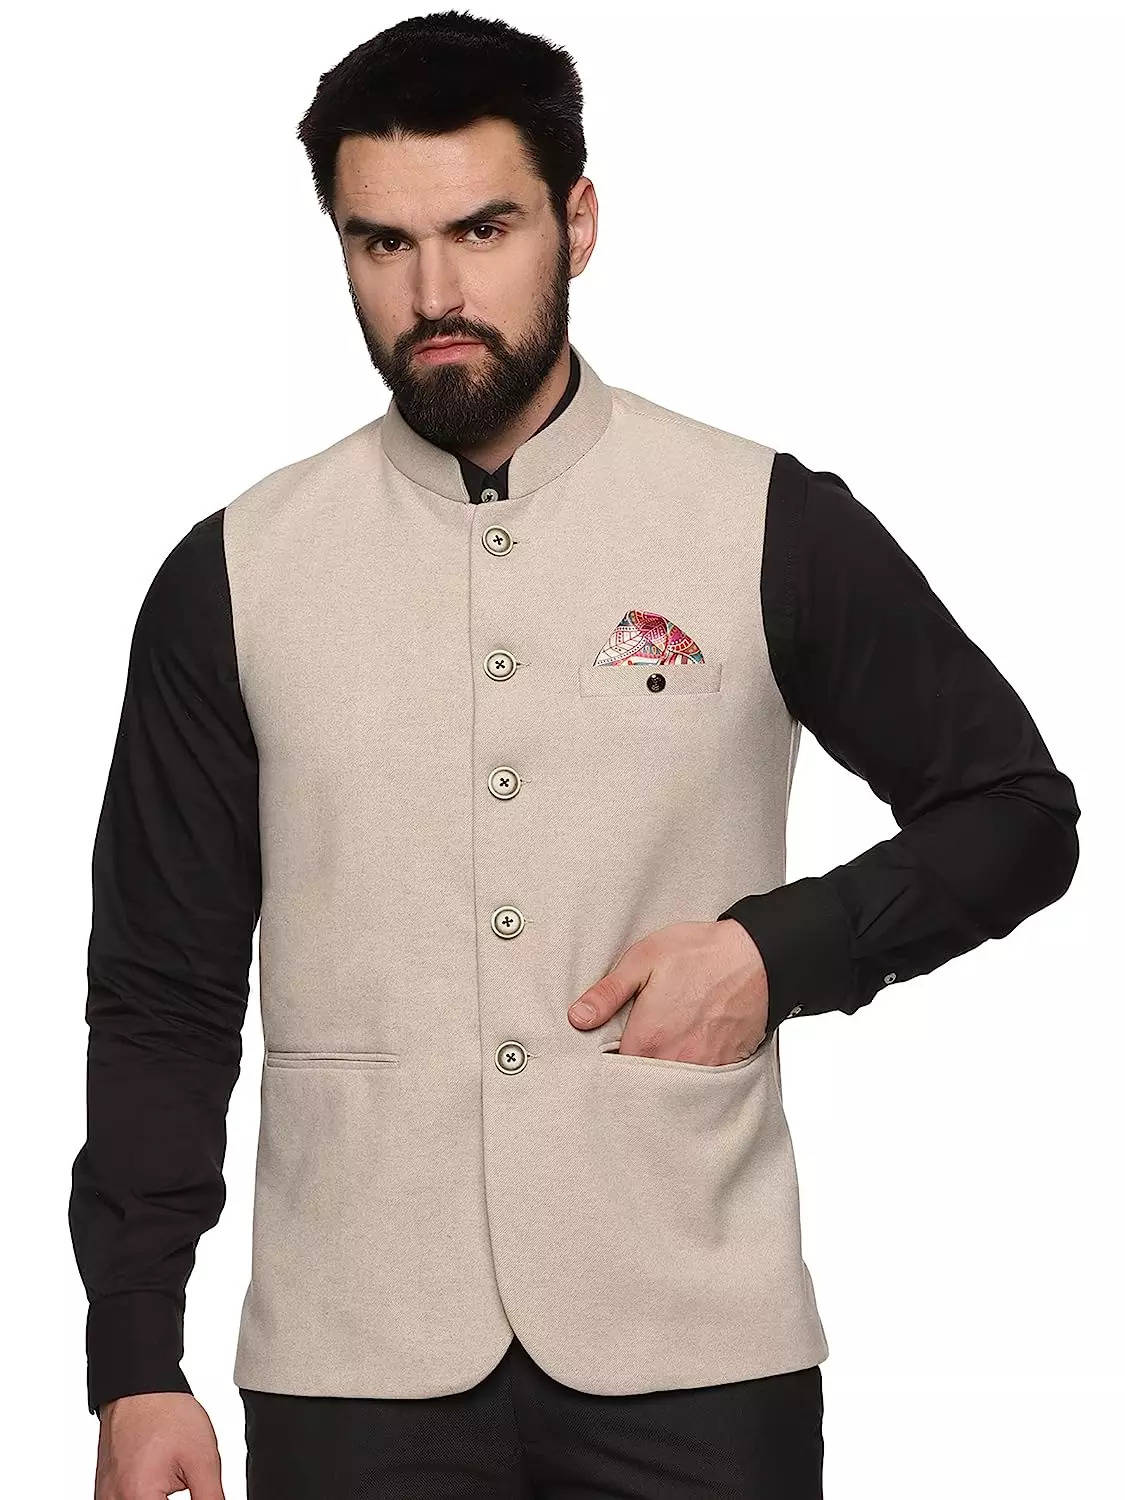 Buy Exotic India Elegant Jacquard silk modi Jacket waist coat with mukaish  And thread Detailing at Amazon.in